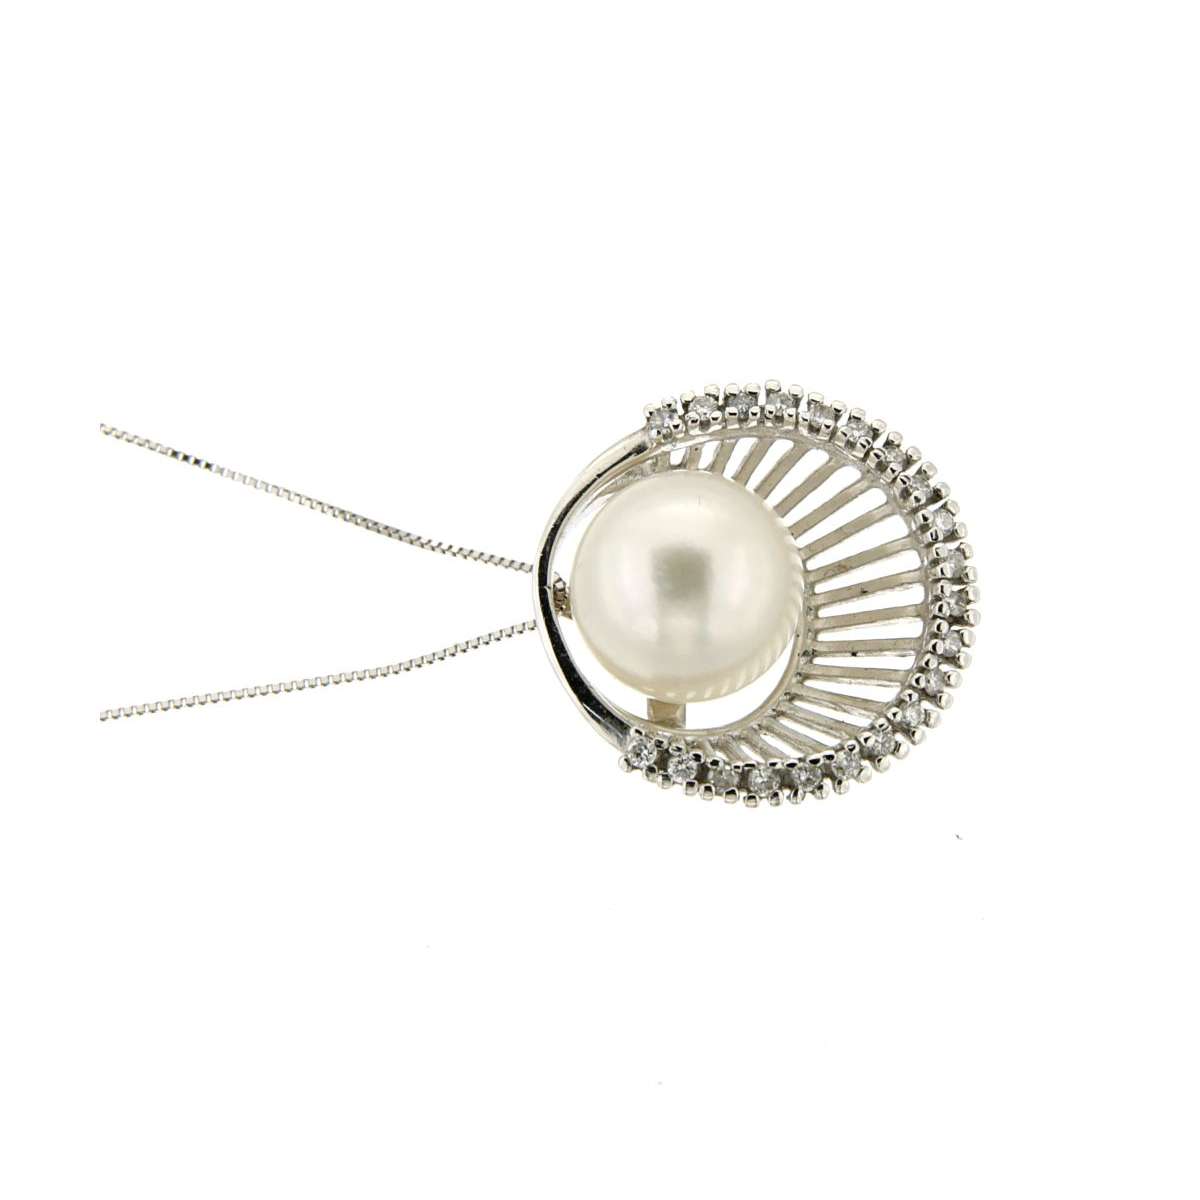 Pearl necklace 9mm 0.13 carats diamonds G-VS1